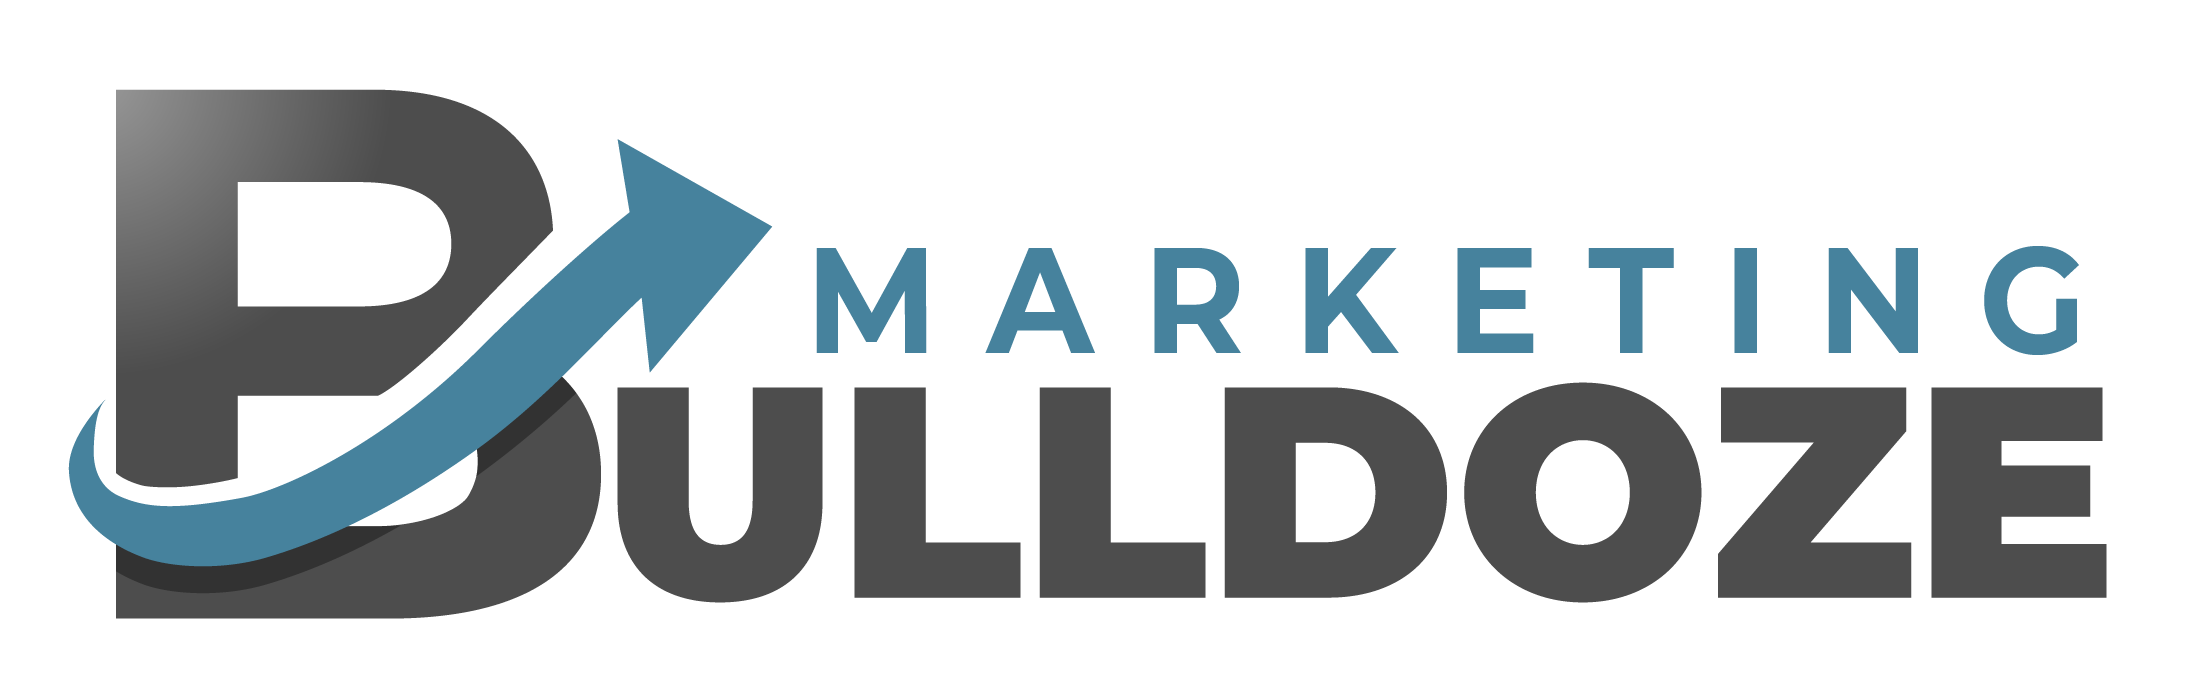 Bulldoze Marketing Site Logo